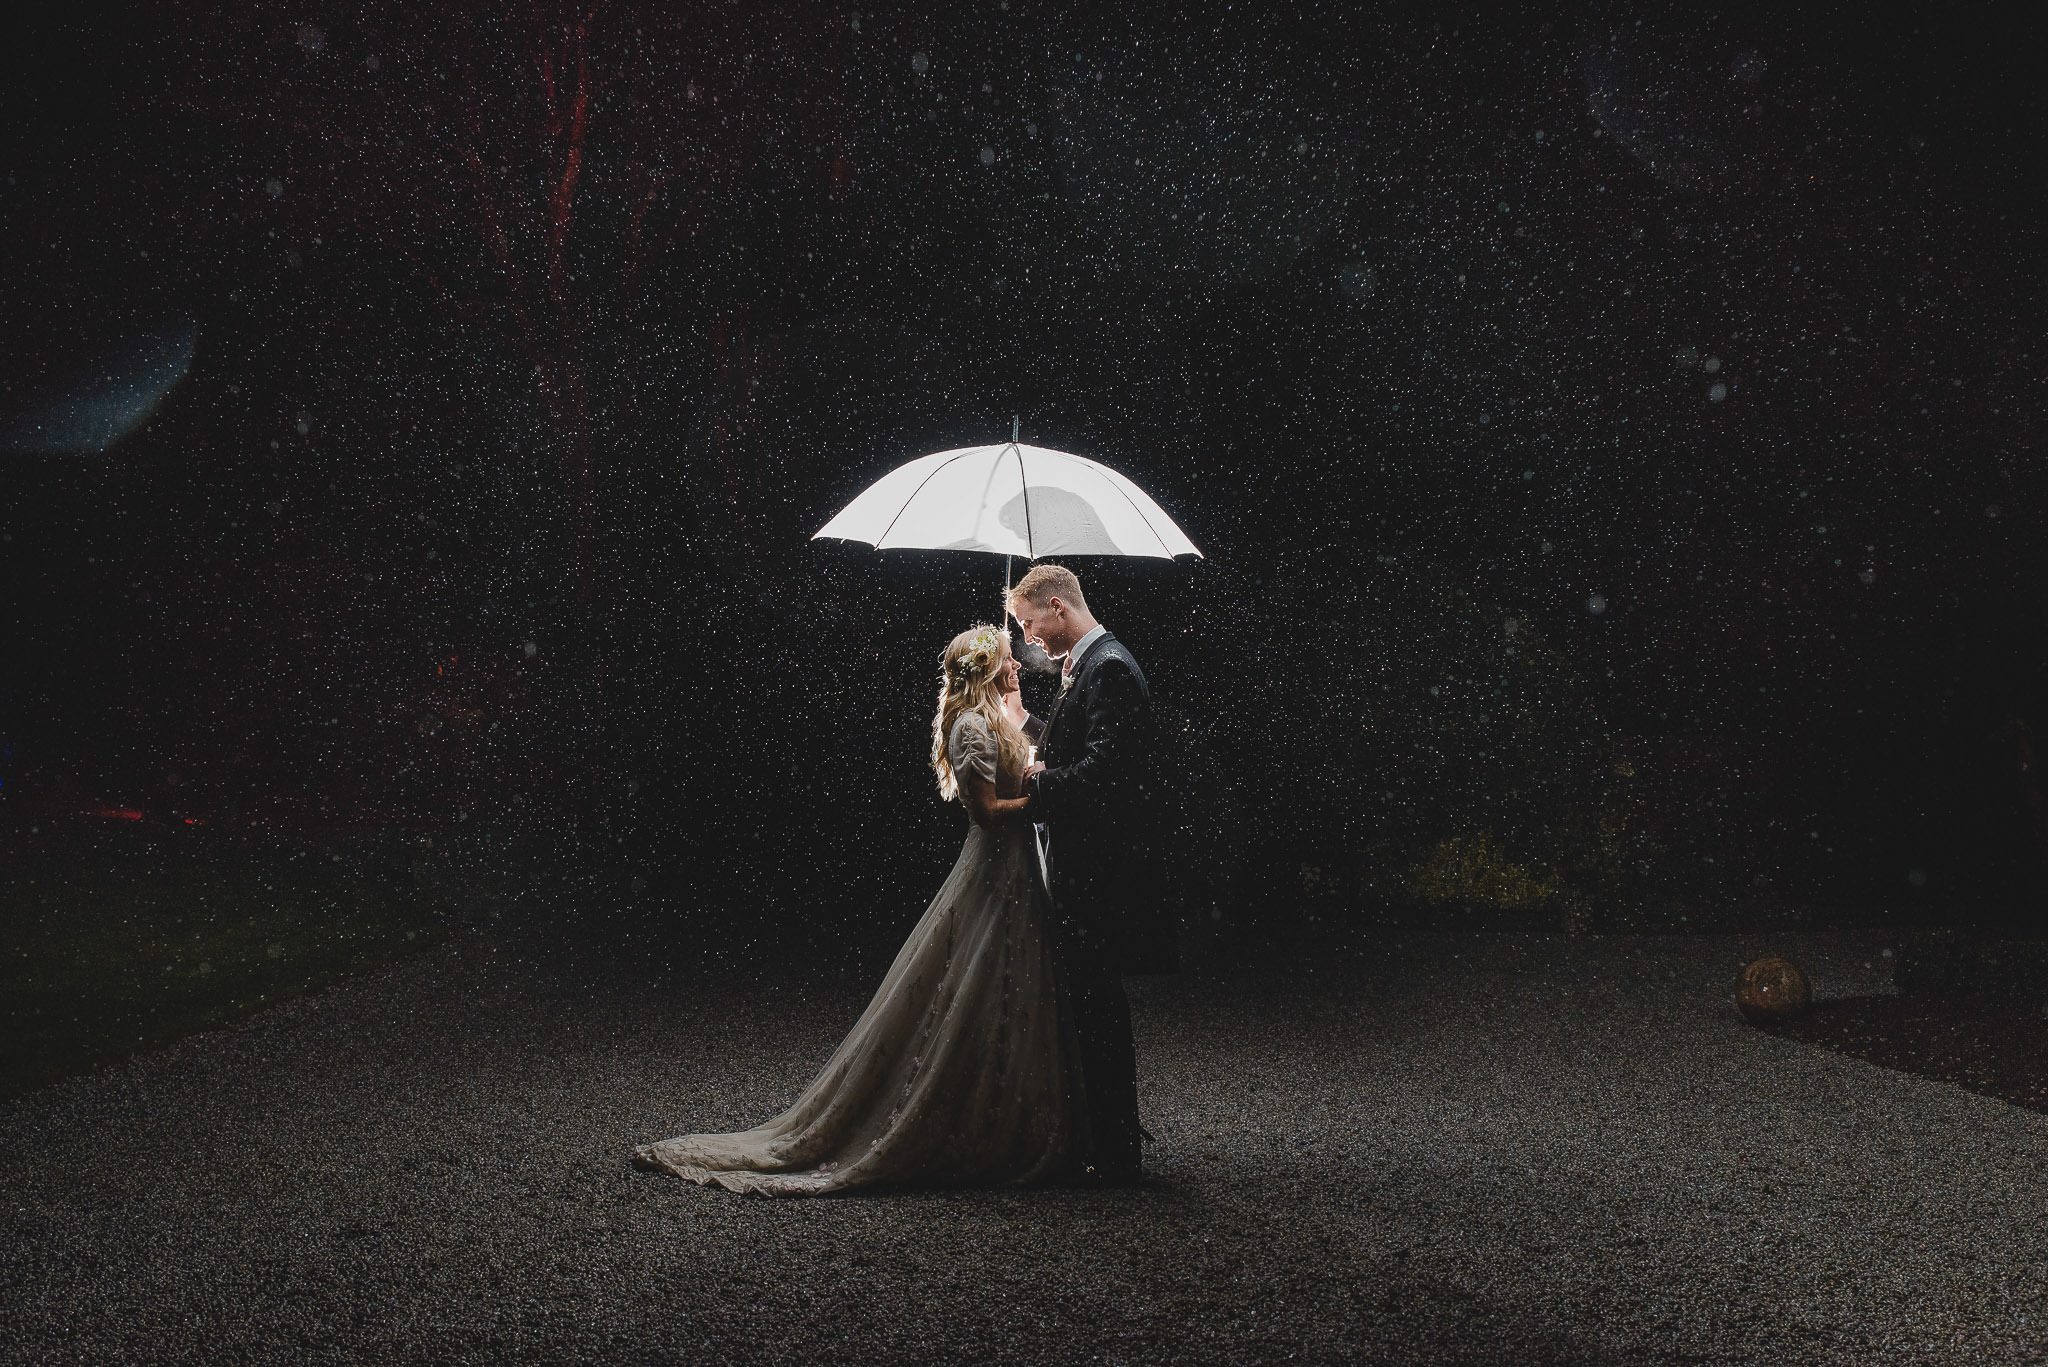 BEST-WEDDING-PHOTOGRAPHER-CORNWALL-2018-1.jpg